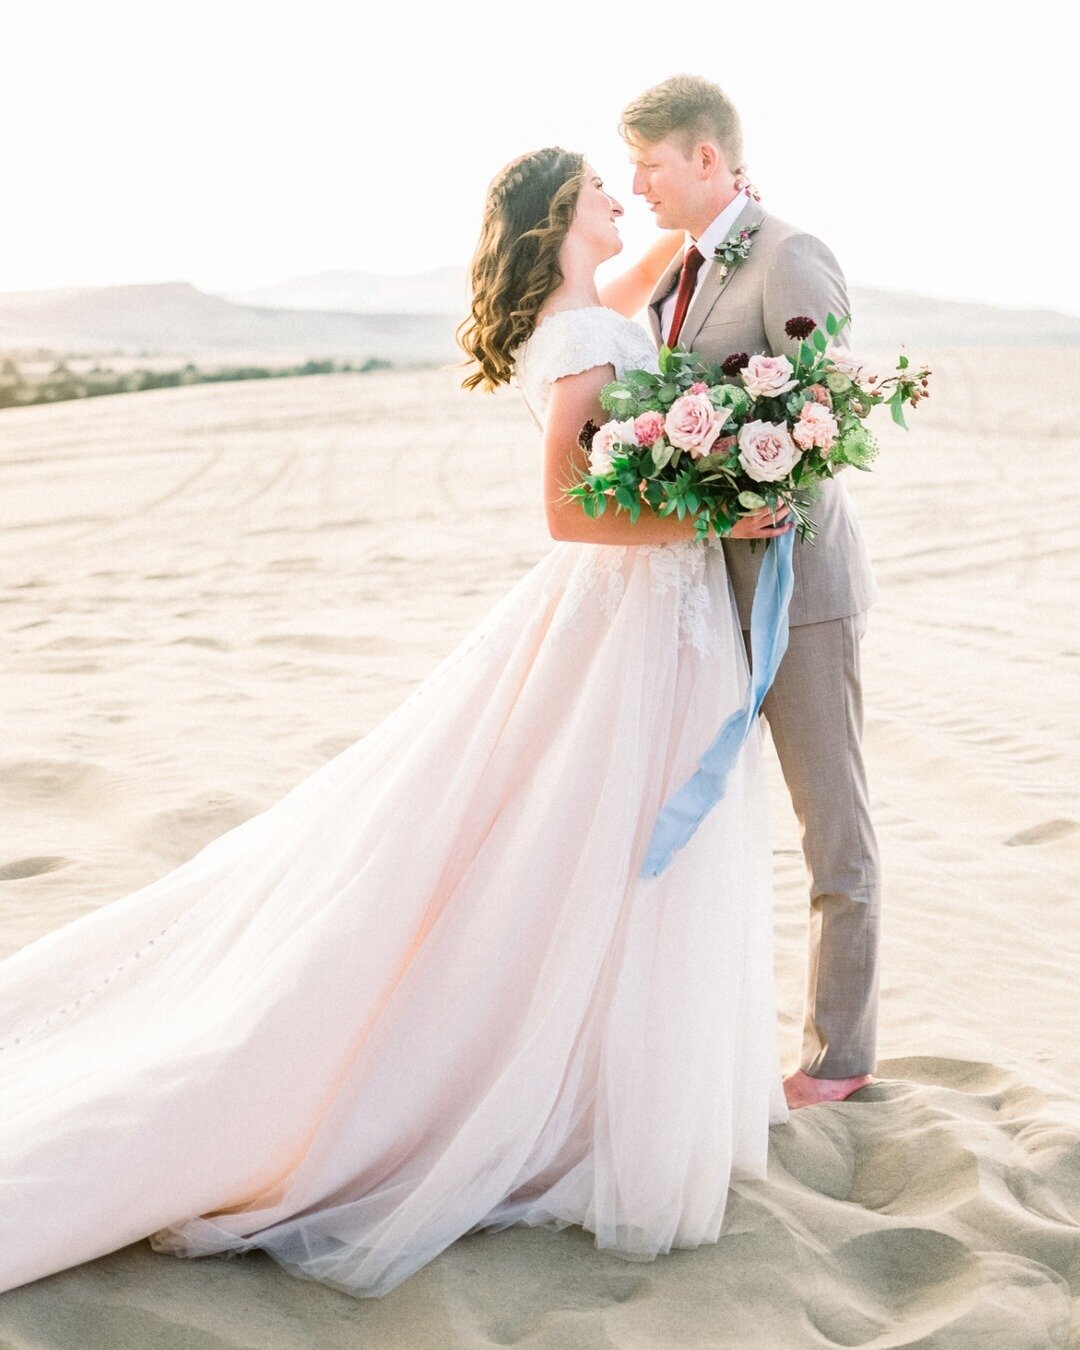 florals &amp; sand⠀⠀⠀⠀⠀⠀⠀⠀⠀
...⠀⠀⠀⠀⠀⠀⠀⠀⠀
...⠀⠀⠀⠀⠀⠀⠀⠀⠀
bride @ashlynn.lane.hafen⠀⠀⠀⠀⠀⠀⠀⠀⠀
floral design @plushfloral⠀⠀⠀⠀⠀⠀⠀⠀⠀
photo @mckenzieryanfilmandphoto⠀⠀⠀⠀⠀⠀⠀⠀⠀
...⠀⠀⠀⠀⠀⠀⠀⠀⠀
...⠀⠀⠀⠀⠀⠀⠀⠀⠀
 #couplegoals #weddingday #weddinfphotography #idahofloris